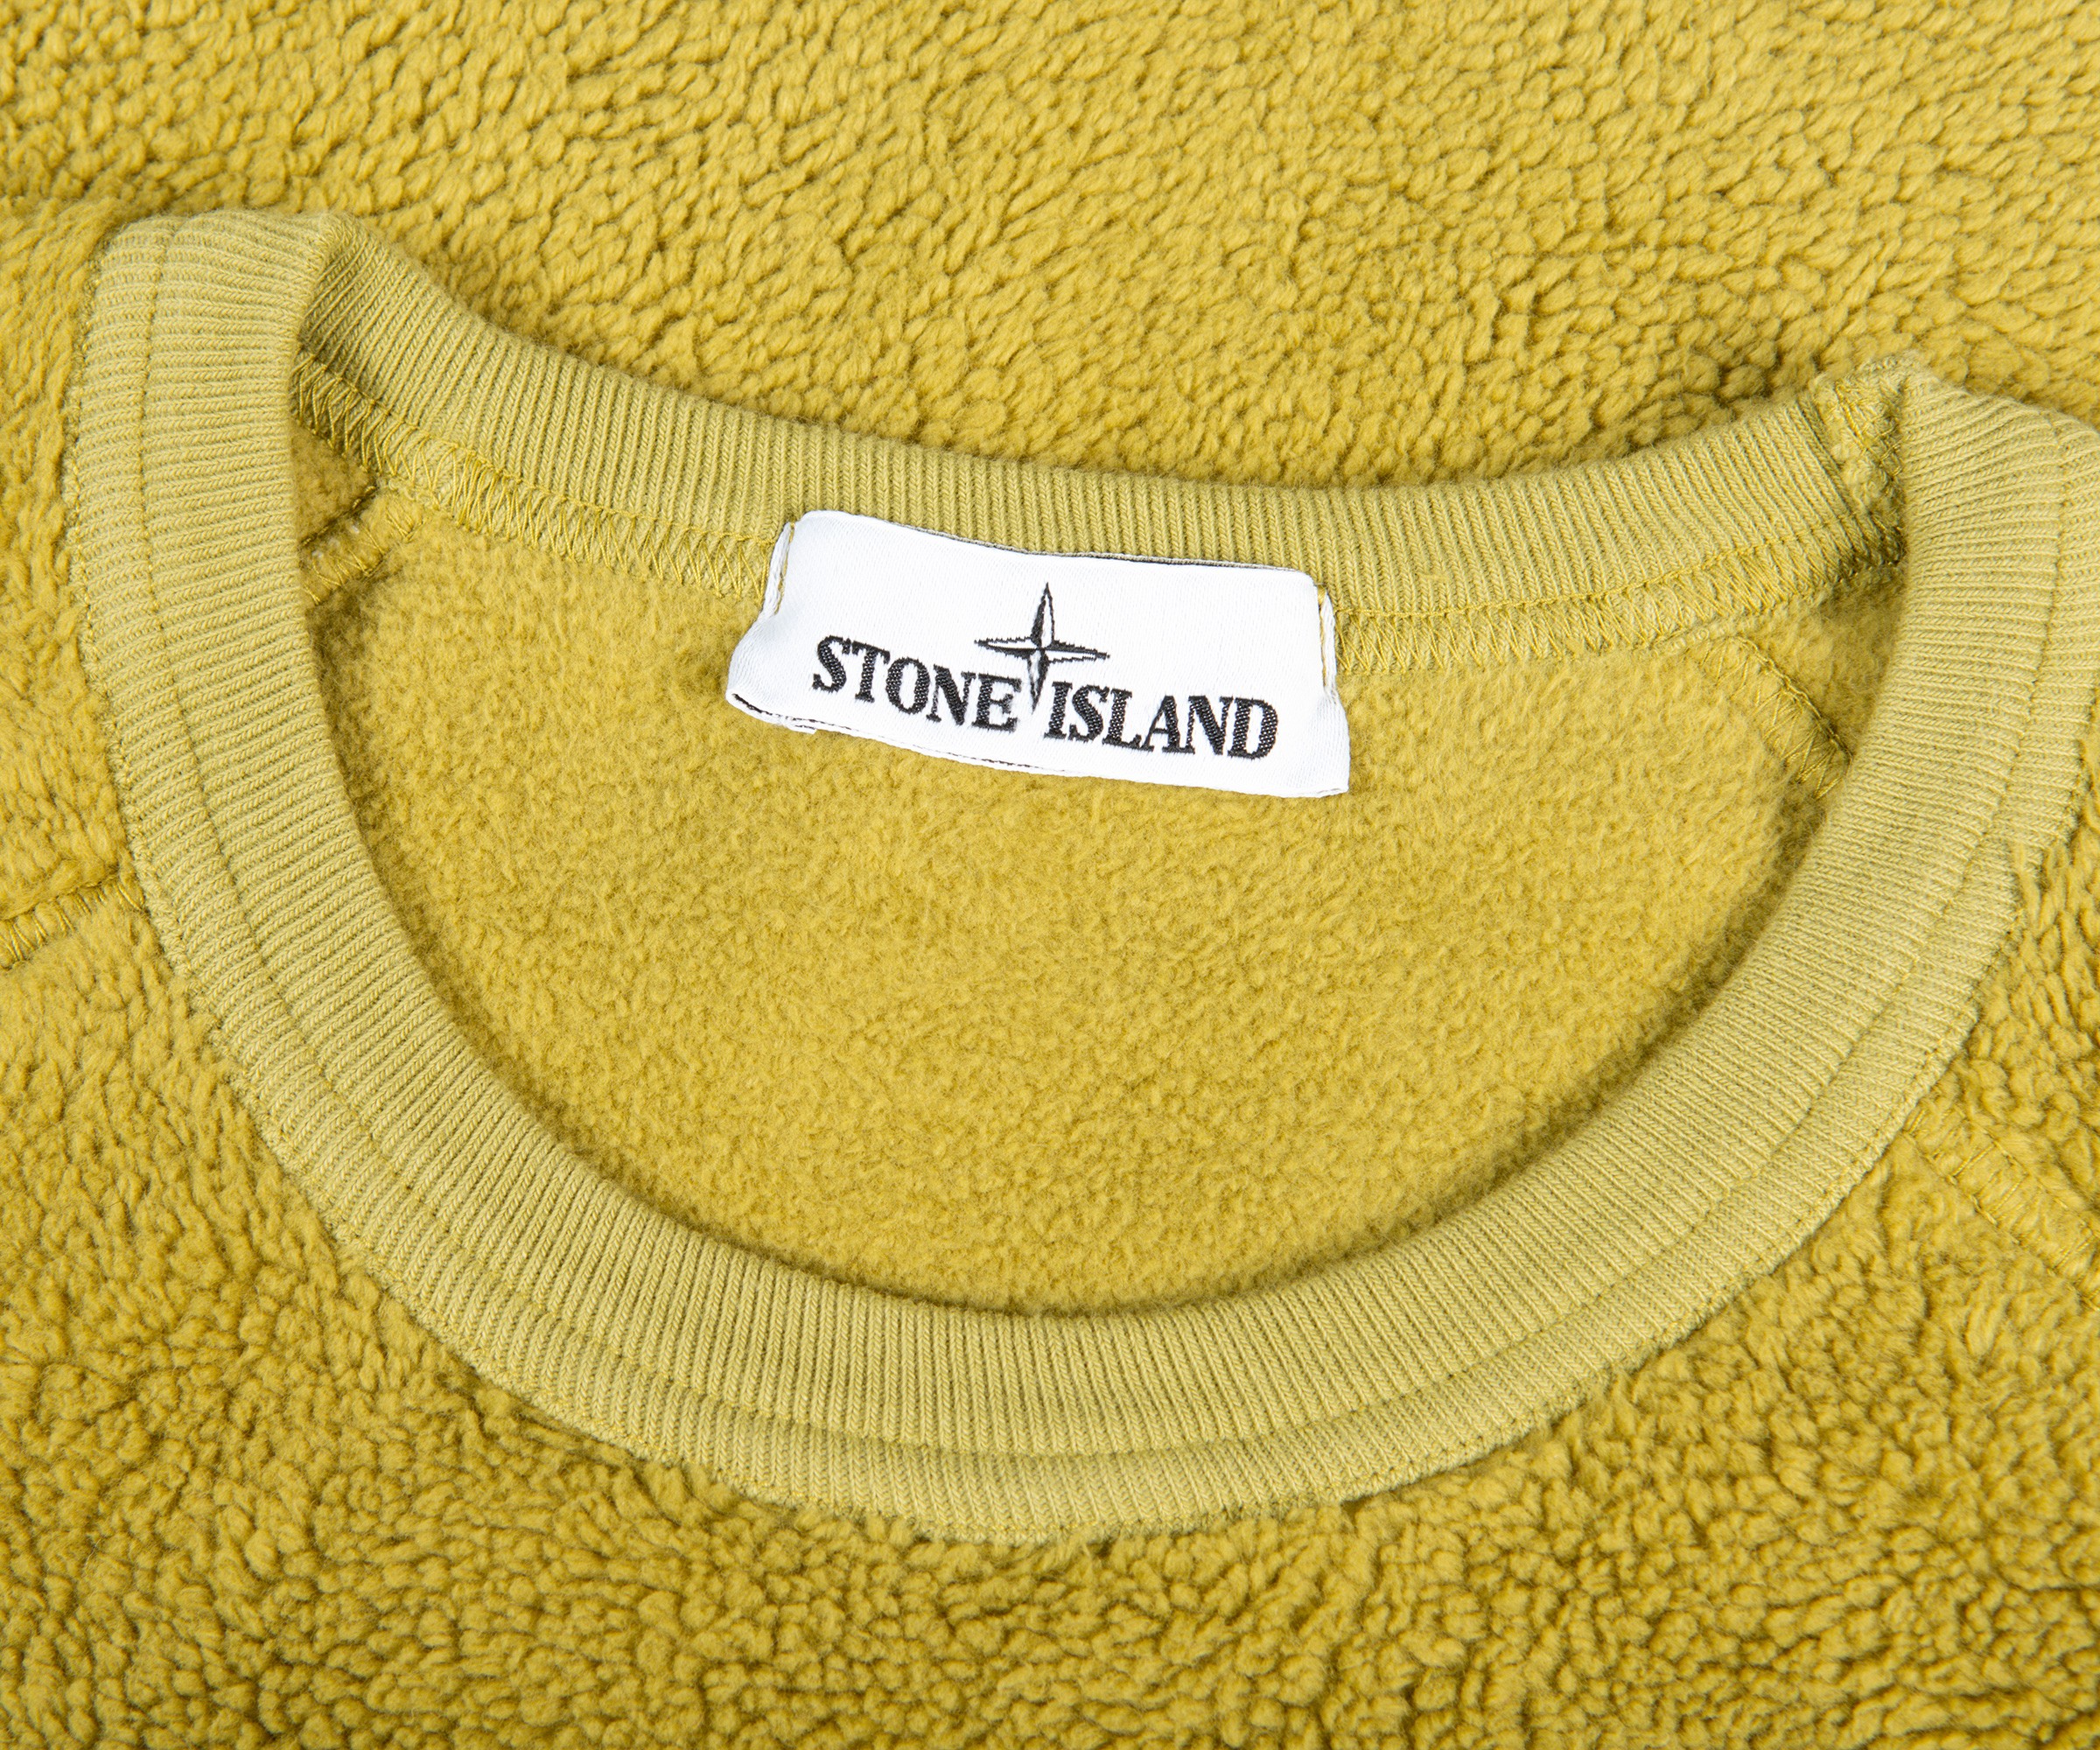 Stone Island 'Cotton Pile' Crewneck Sweatshirt Bark